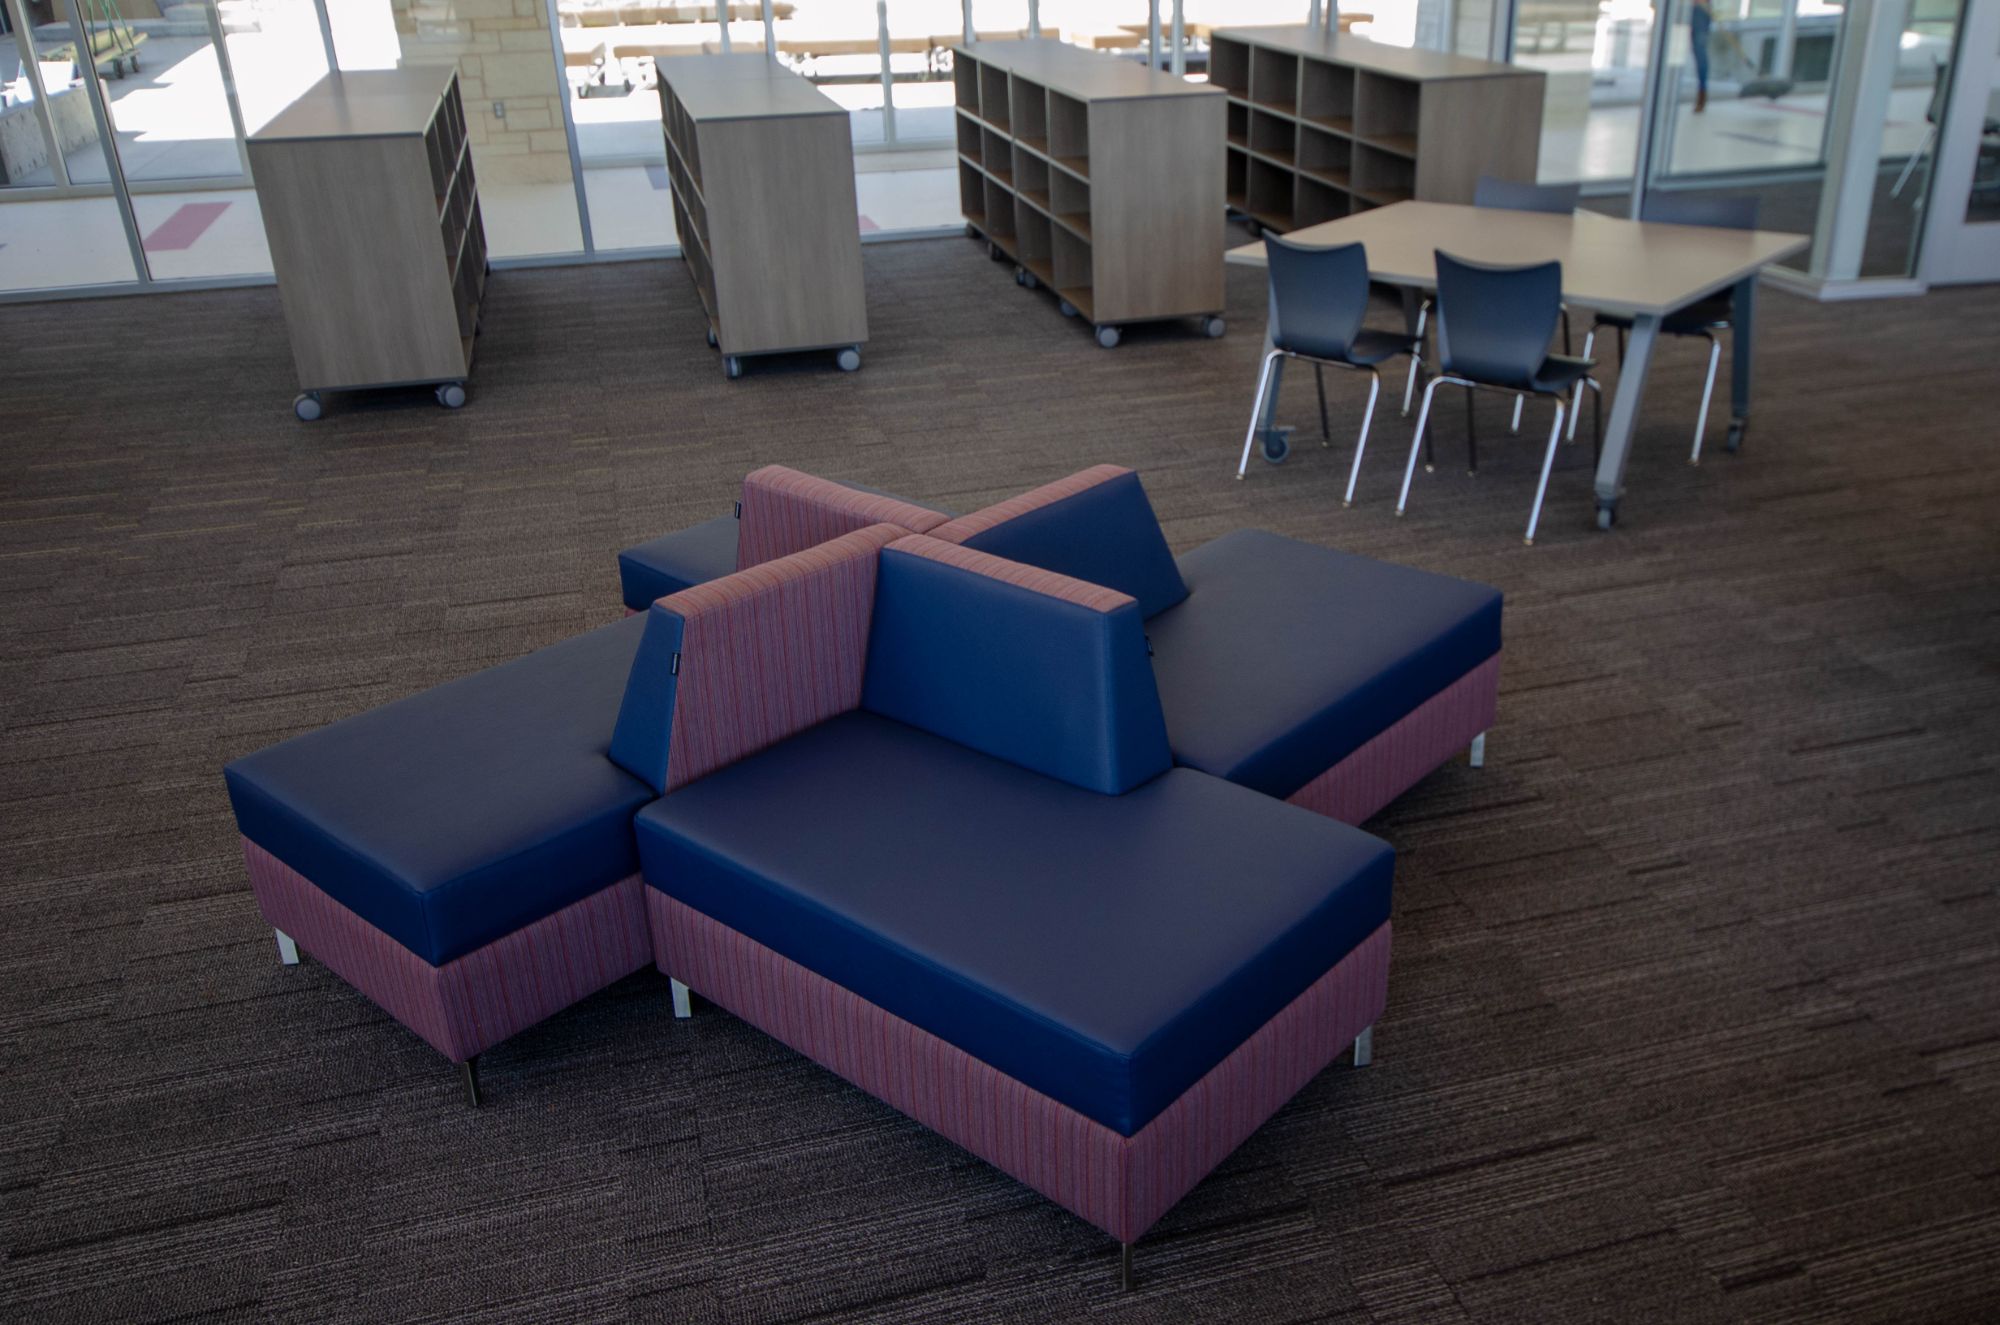 Lone Star Furnishings - Texas School Furniture - DSC 0471